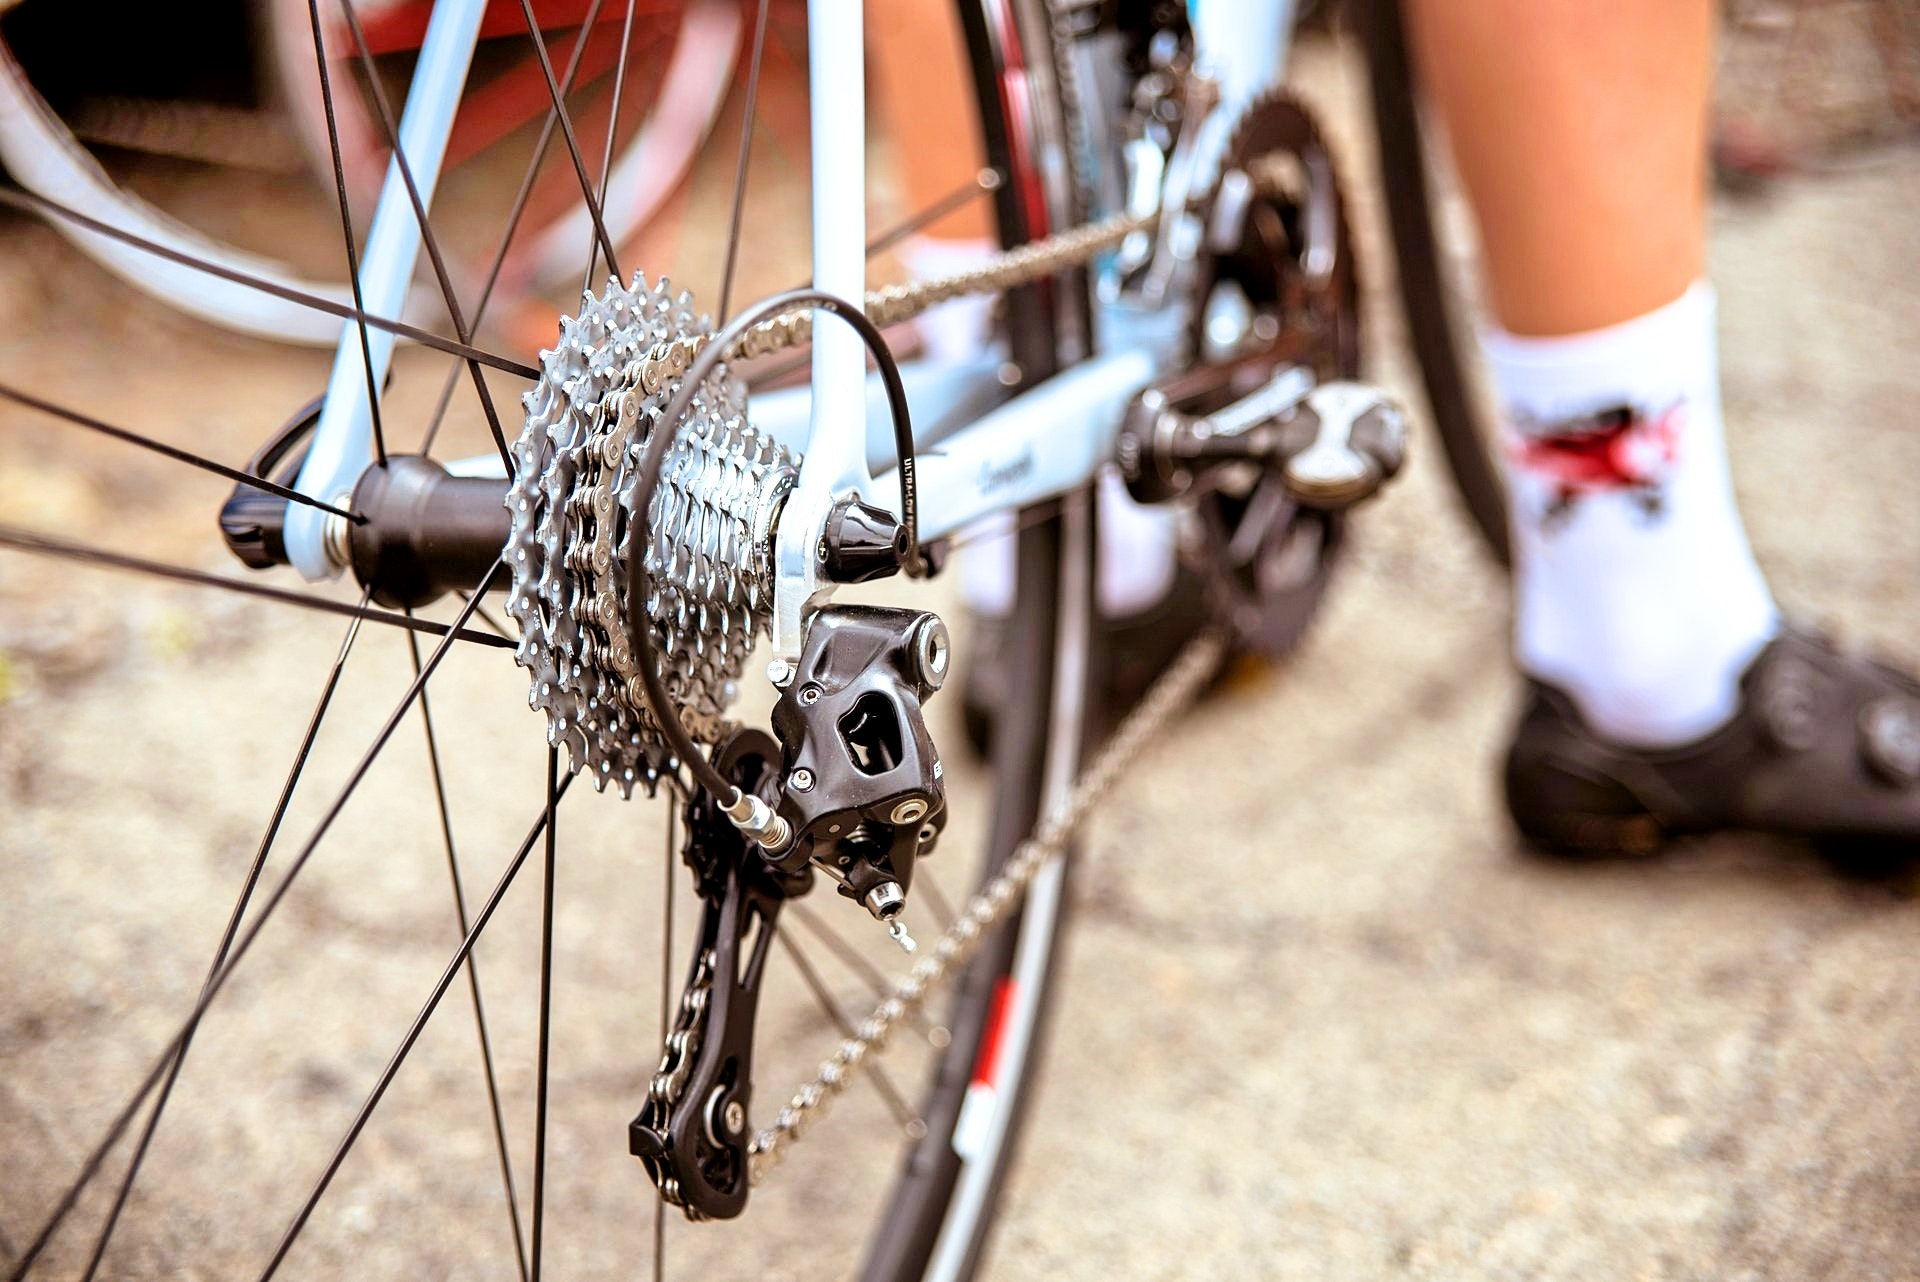 Beginnerâs Guide to Bicycle Gears